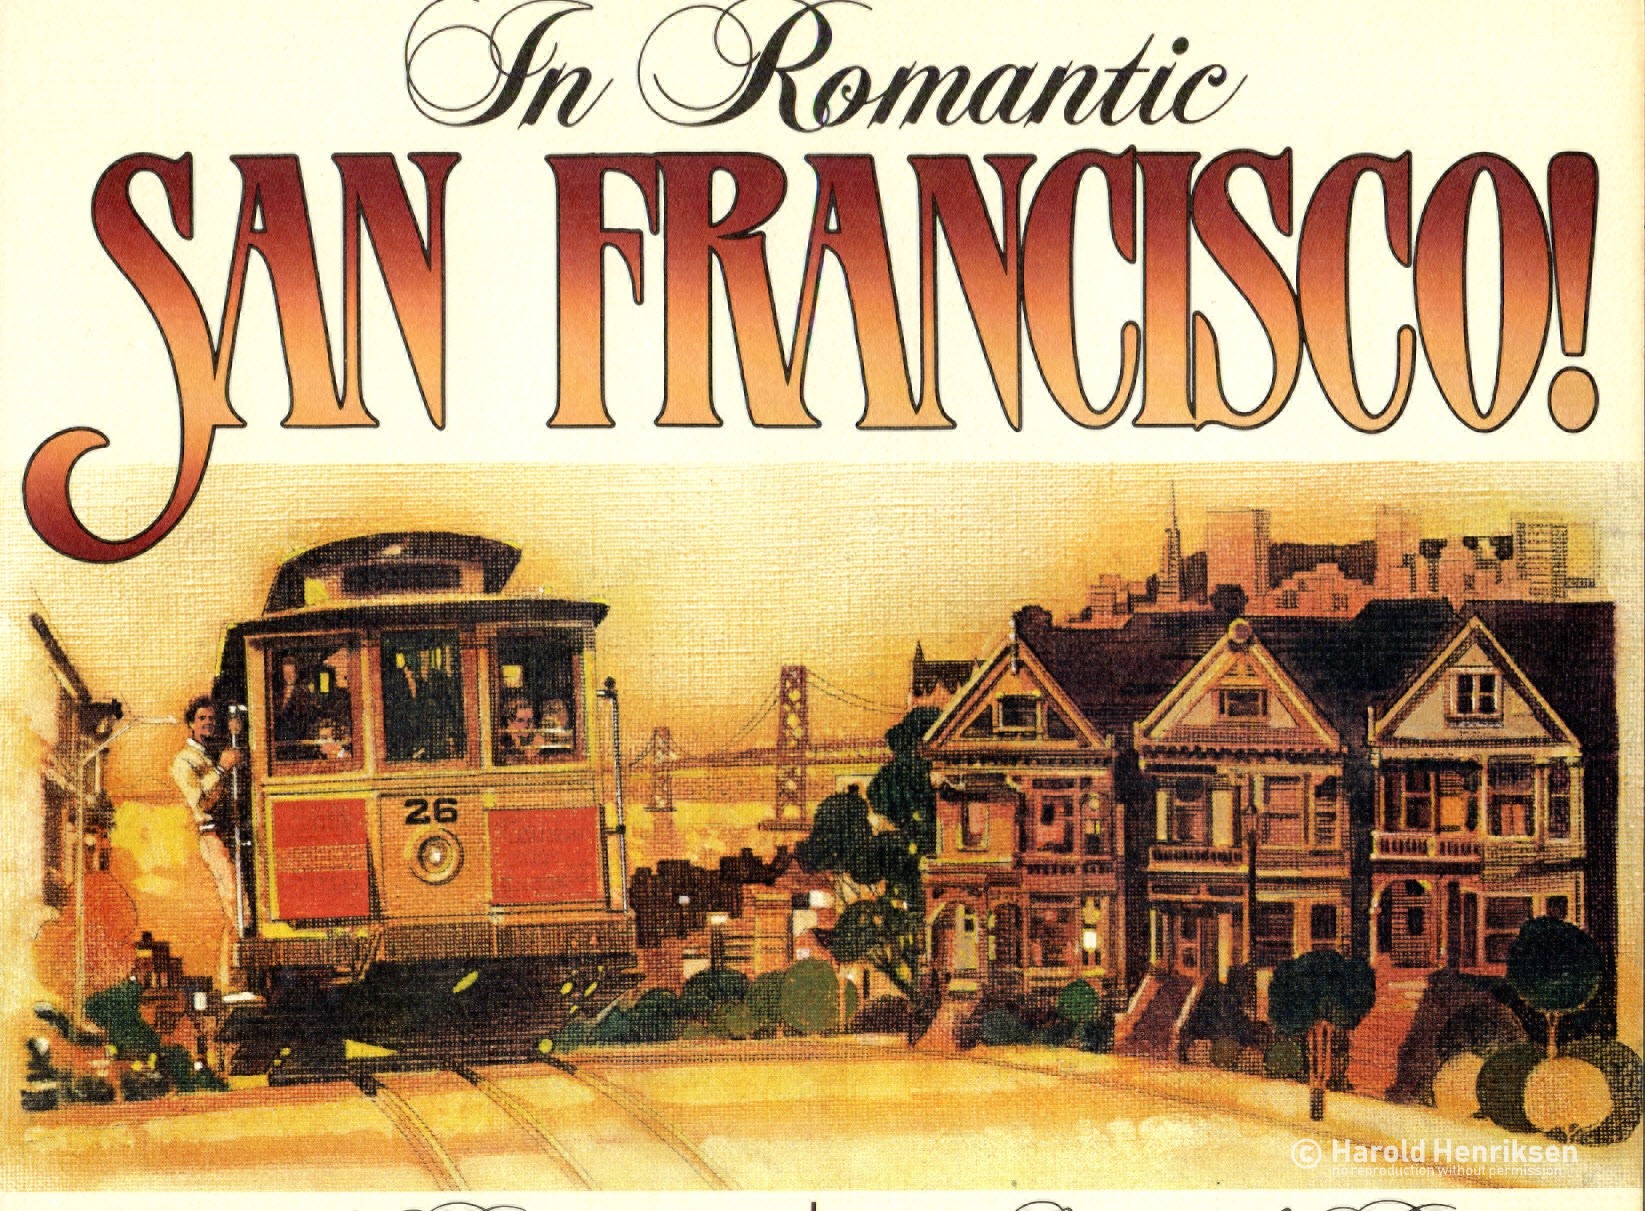 San Francisco Advertisement illustration - Harold Henriksen.